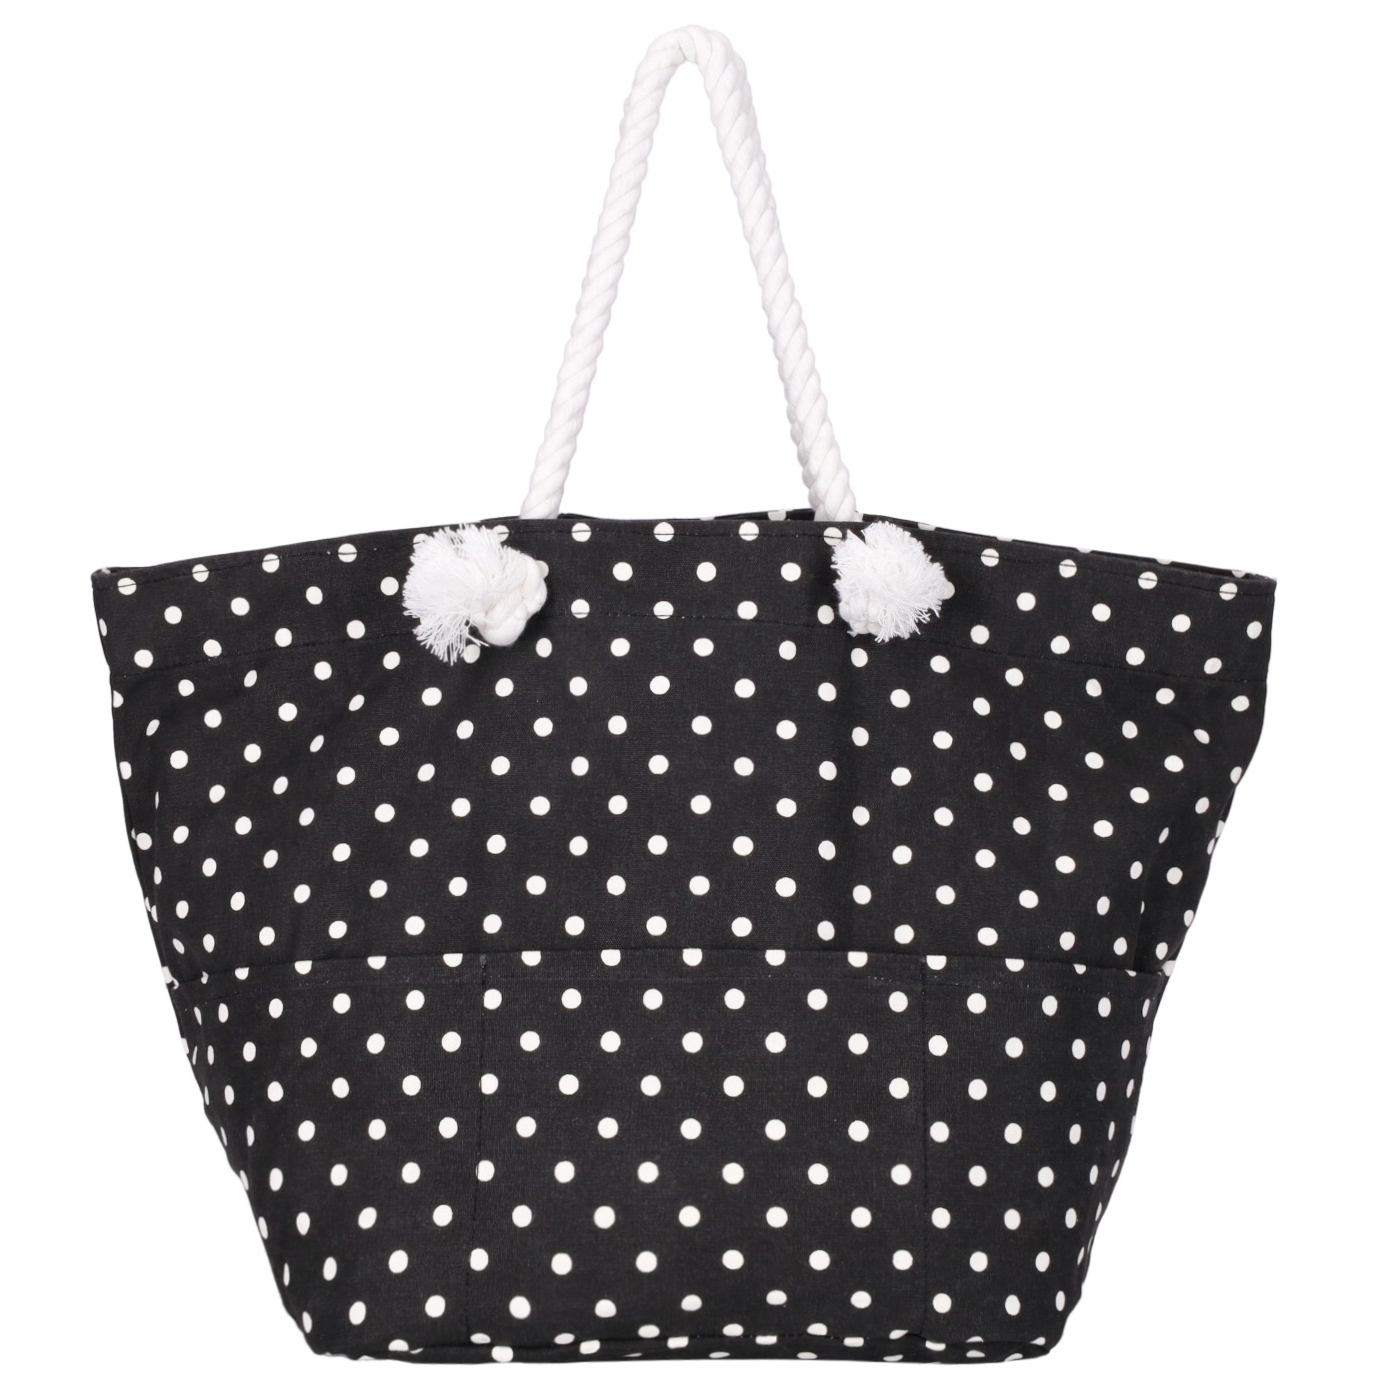 Piace Molto Clover 'Valdiia' Shopper Black white dots